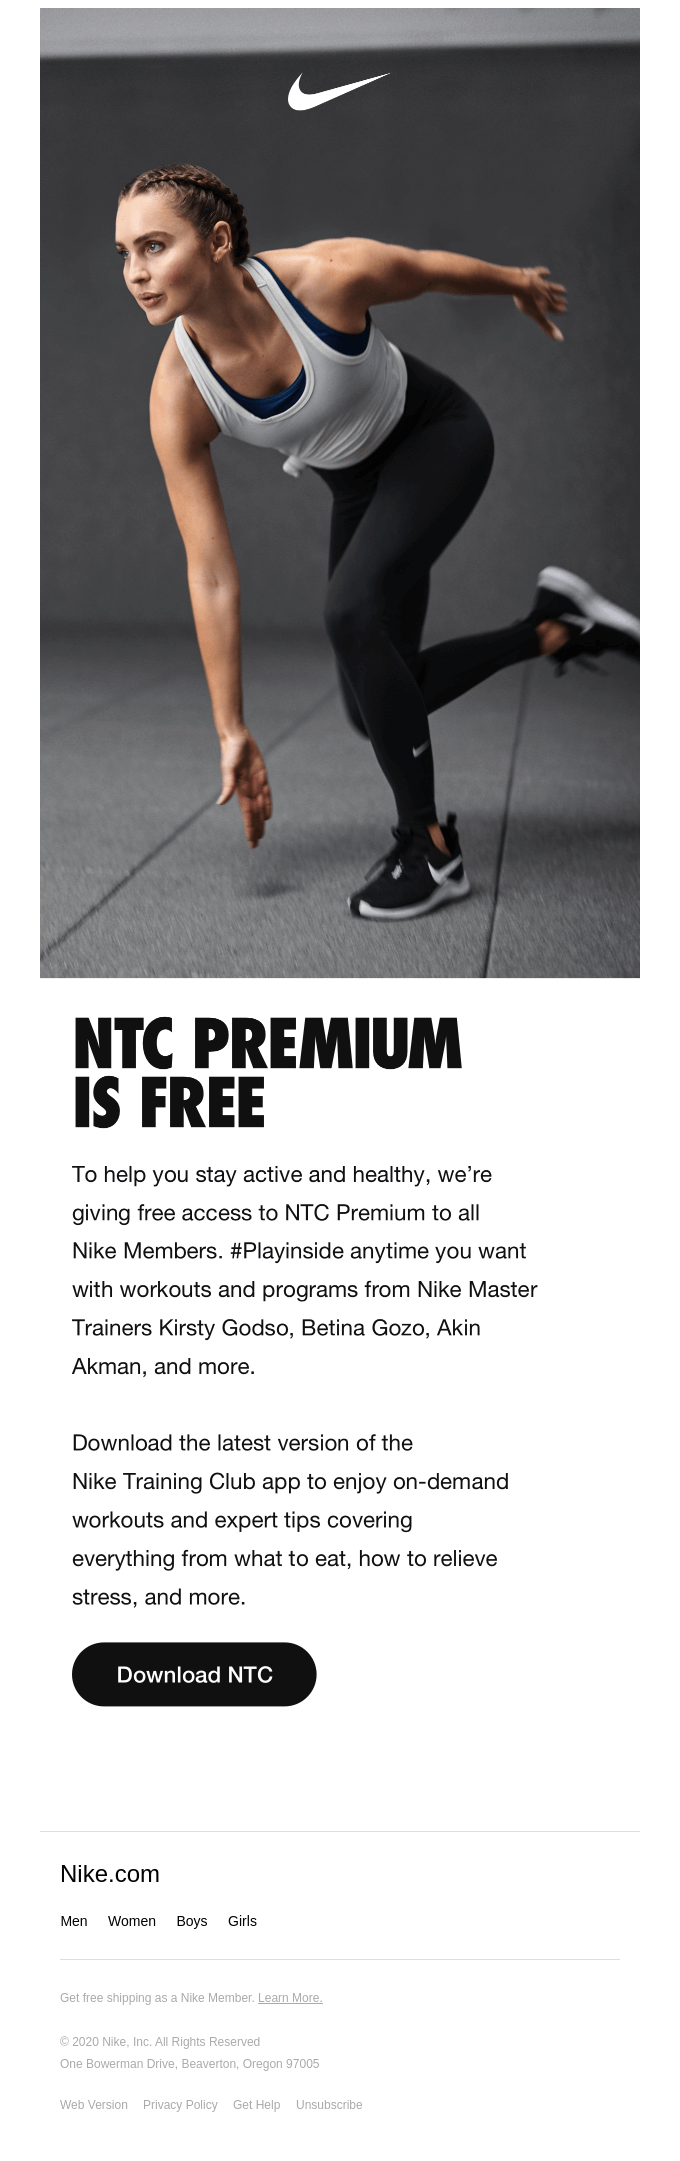 #Playinside with NTC Premium